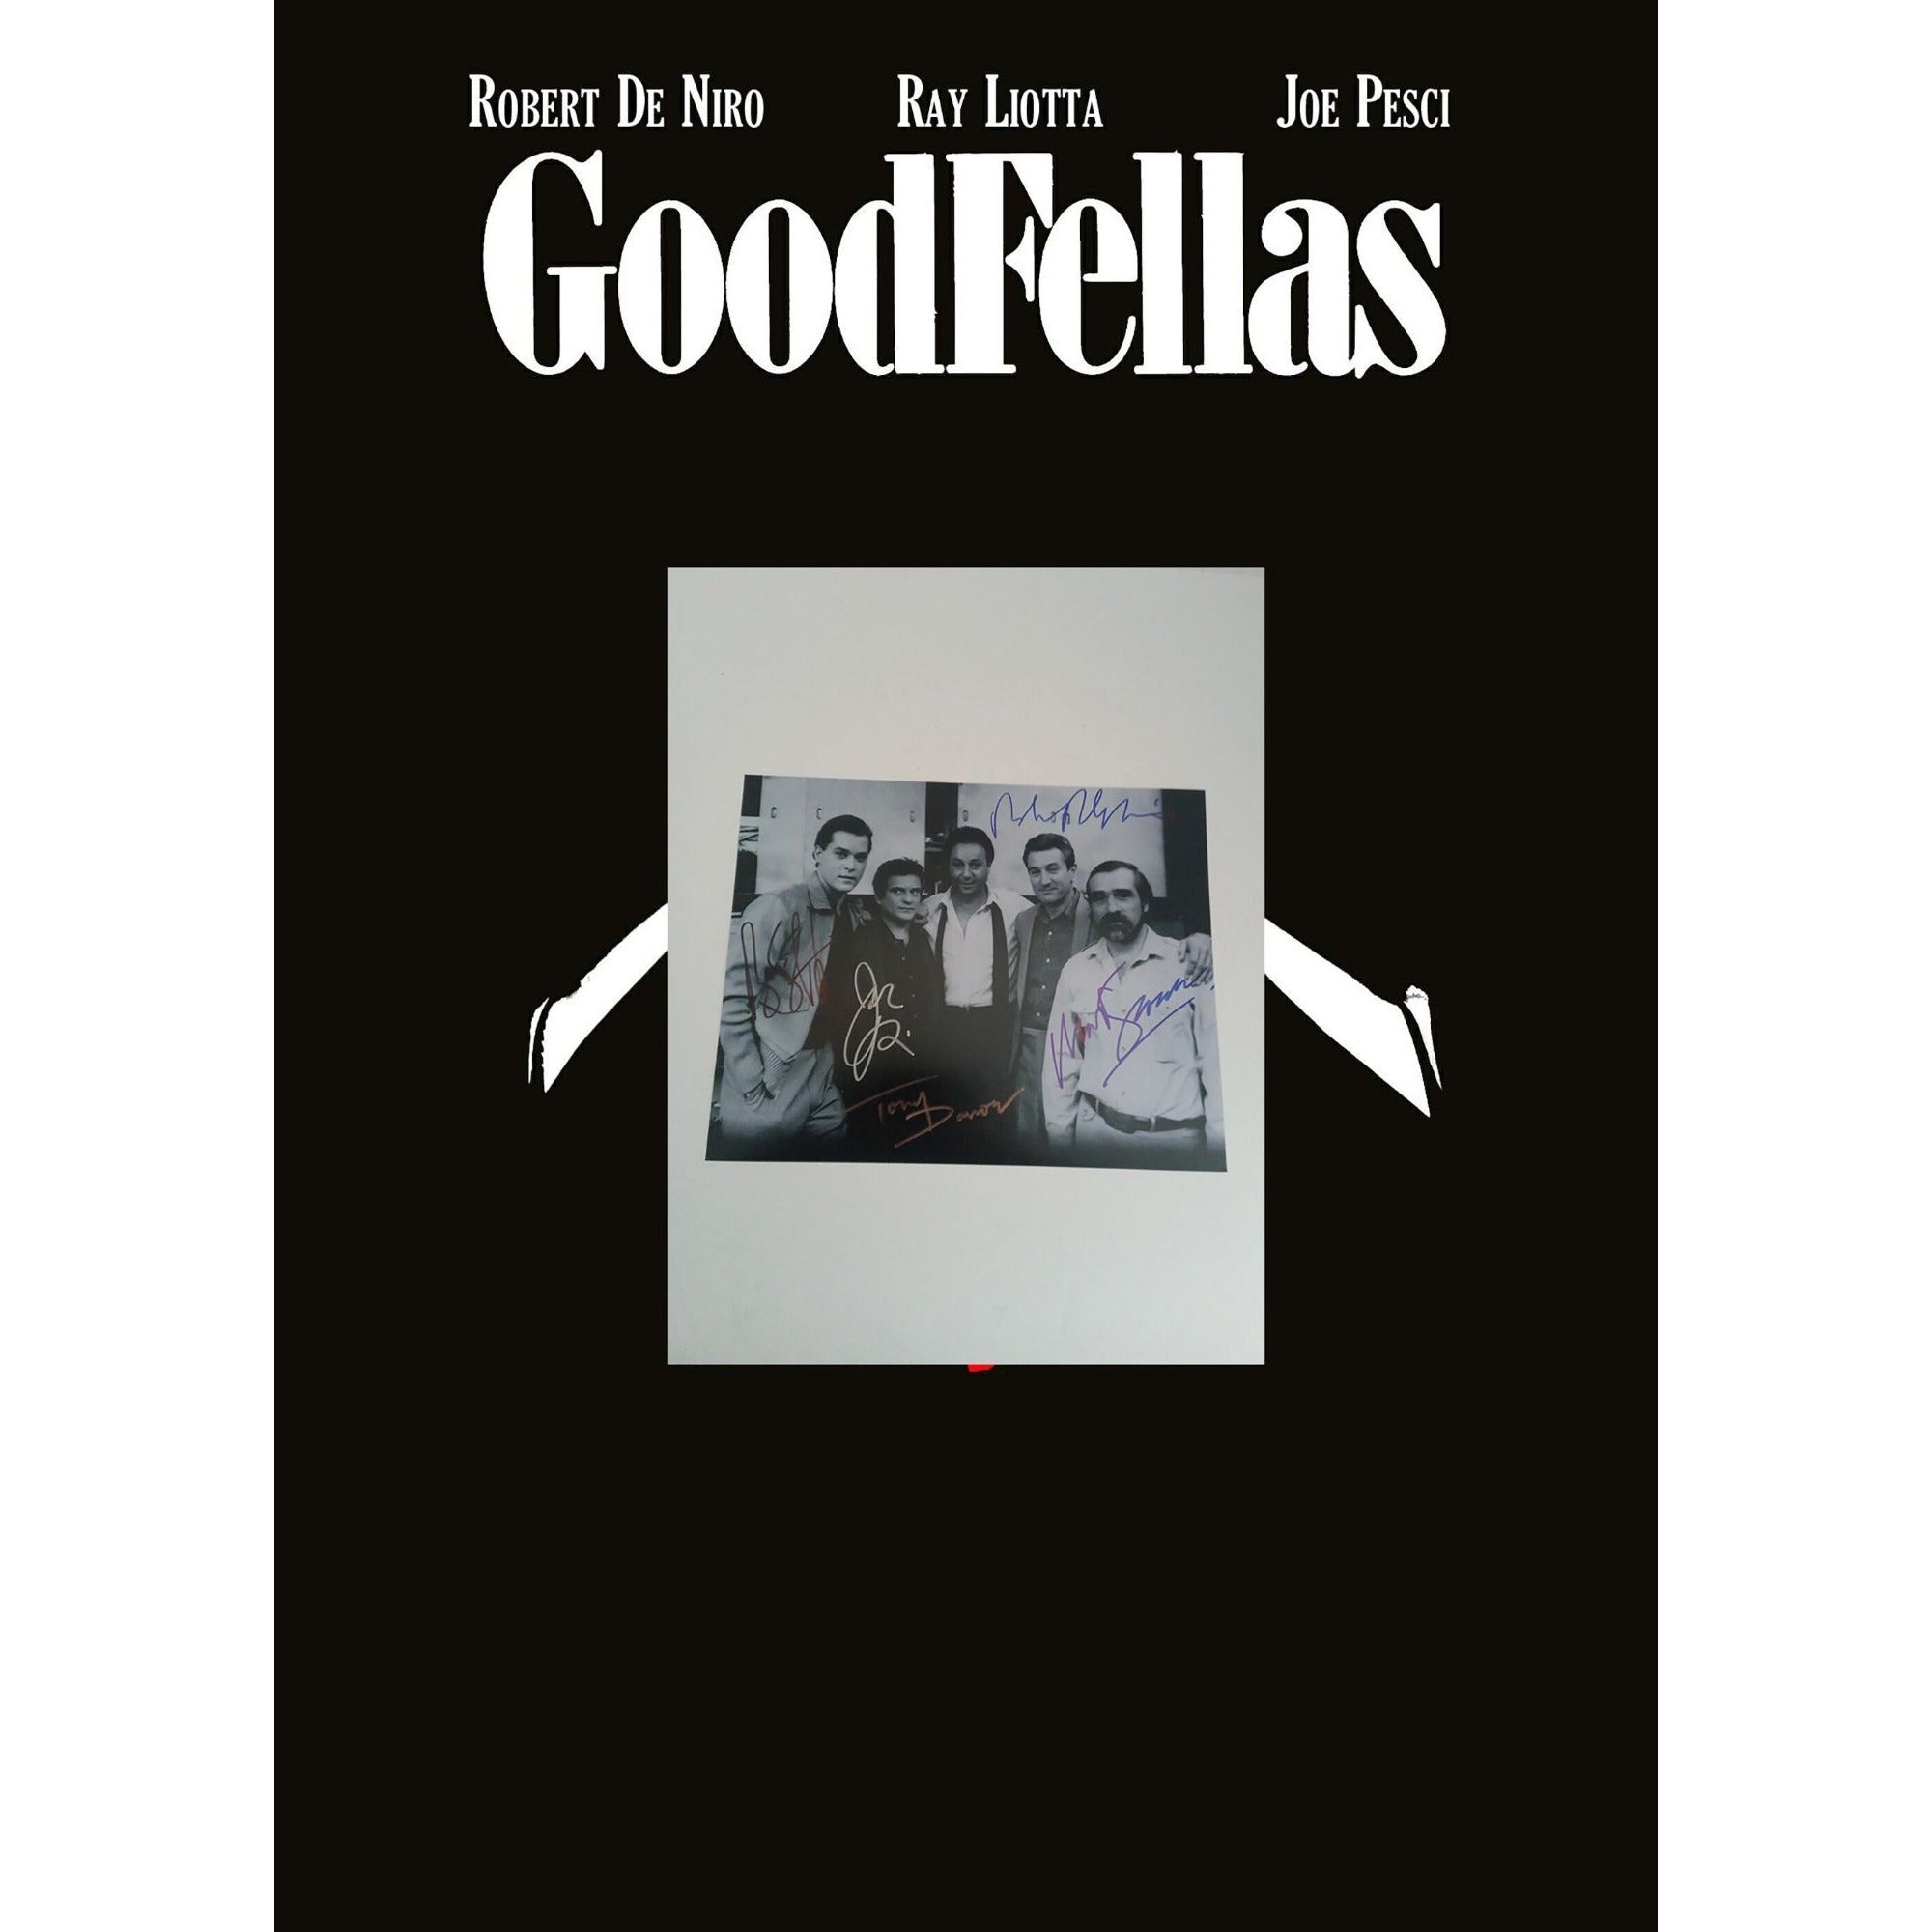 Goodfellas, Robert De Niro, Martin Scorsese, Joe Pesci, Ray Liotta 8 x 10 signed photo with proof